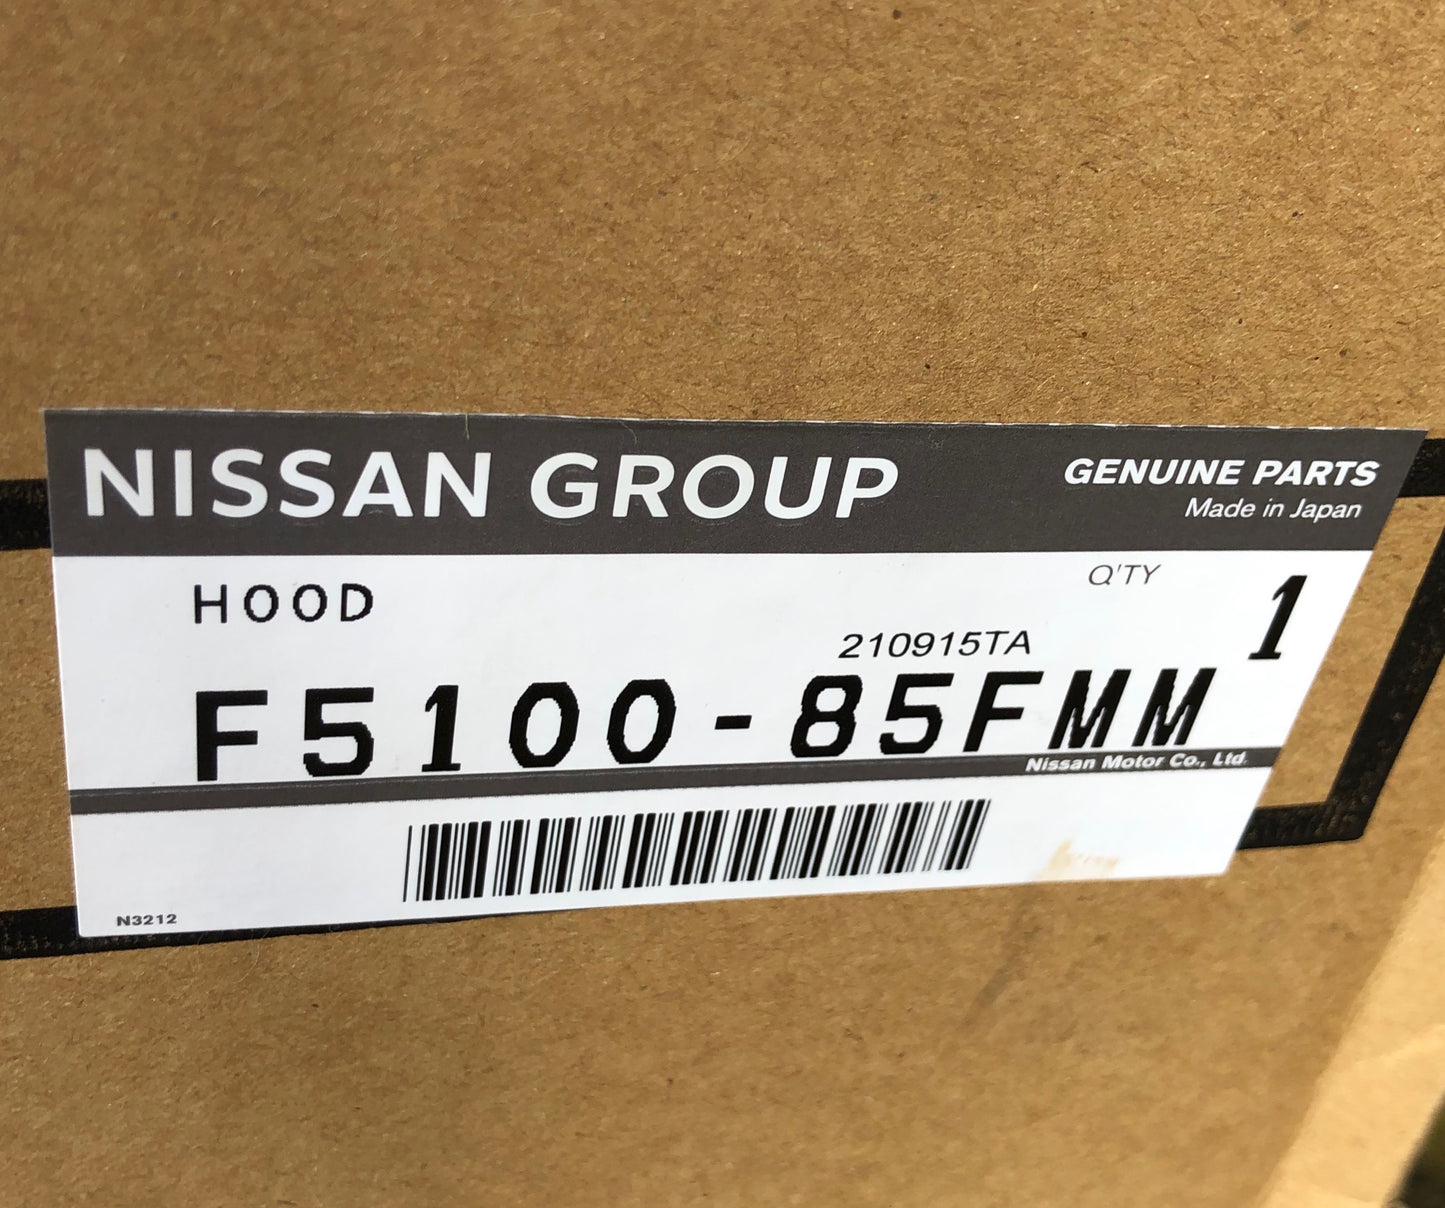 Brand New Genuine Nissan Part Silvia S15 Bonnet Hood In Factory Packaging